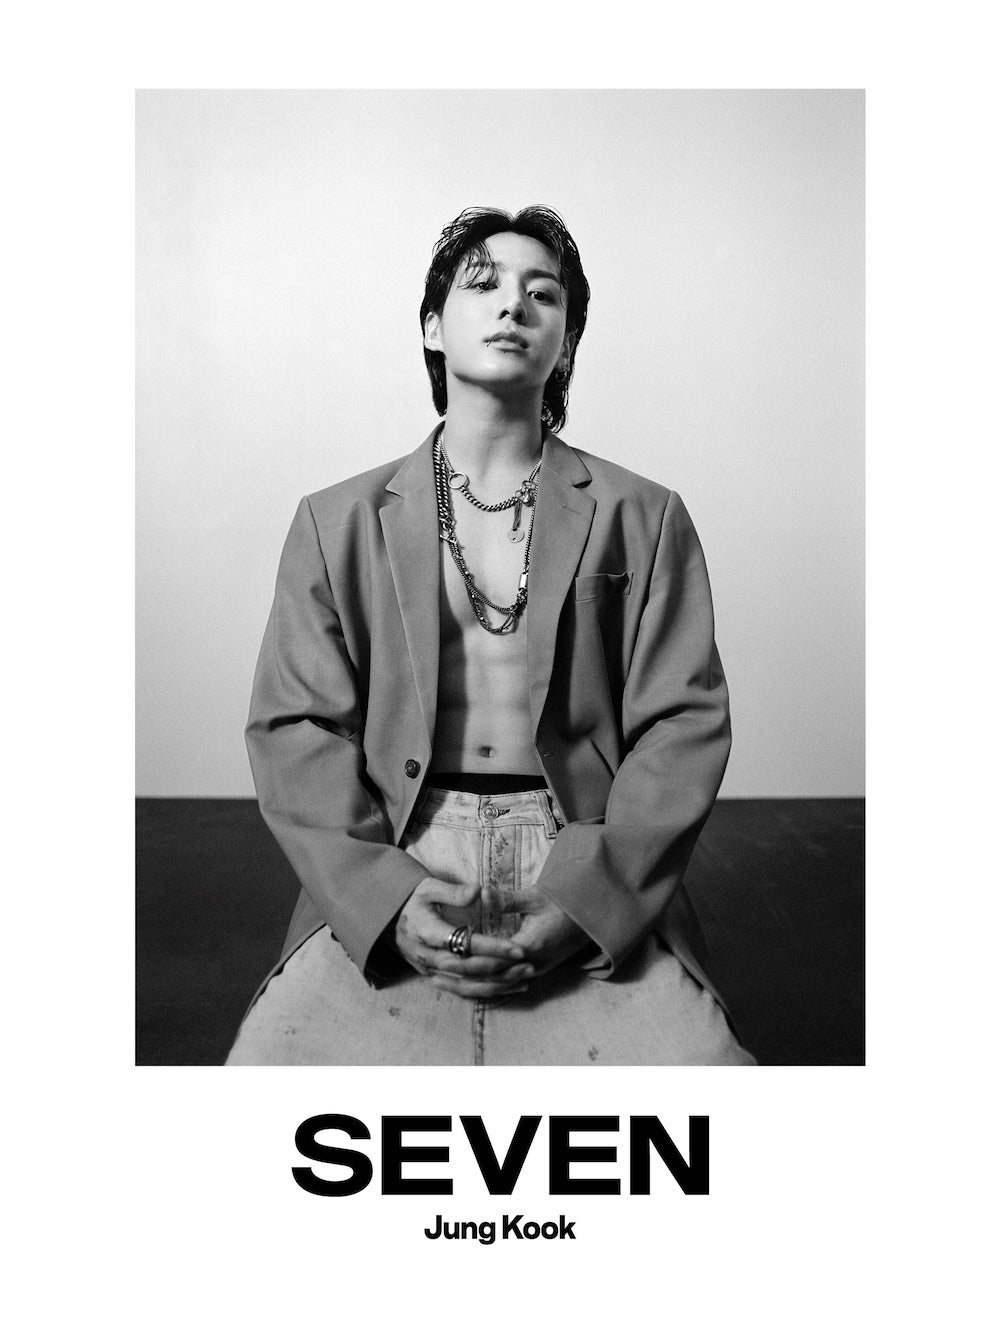 BTSジョングク「Seven」Clean Ver.とExplicit Ver.の違い話題「かなり